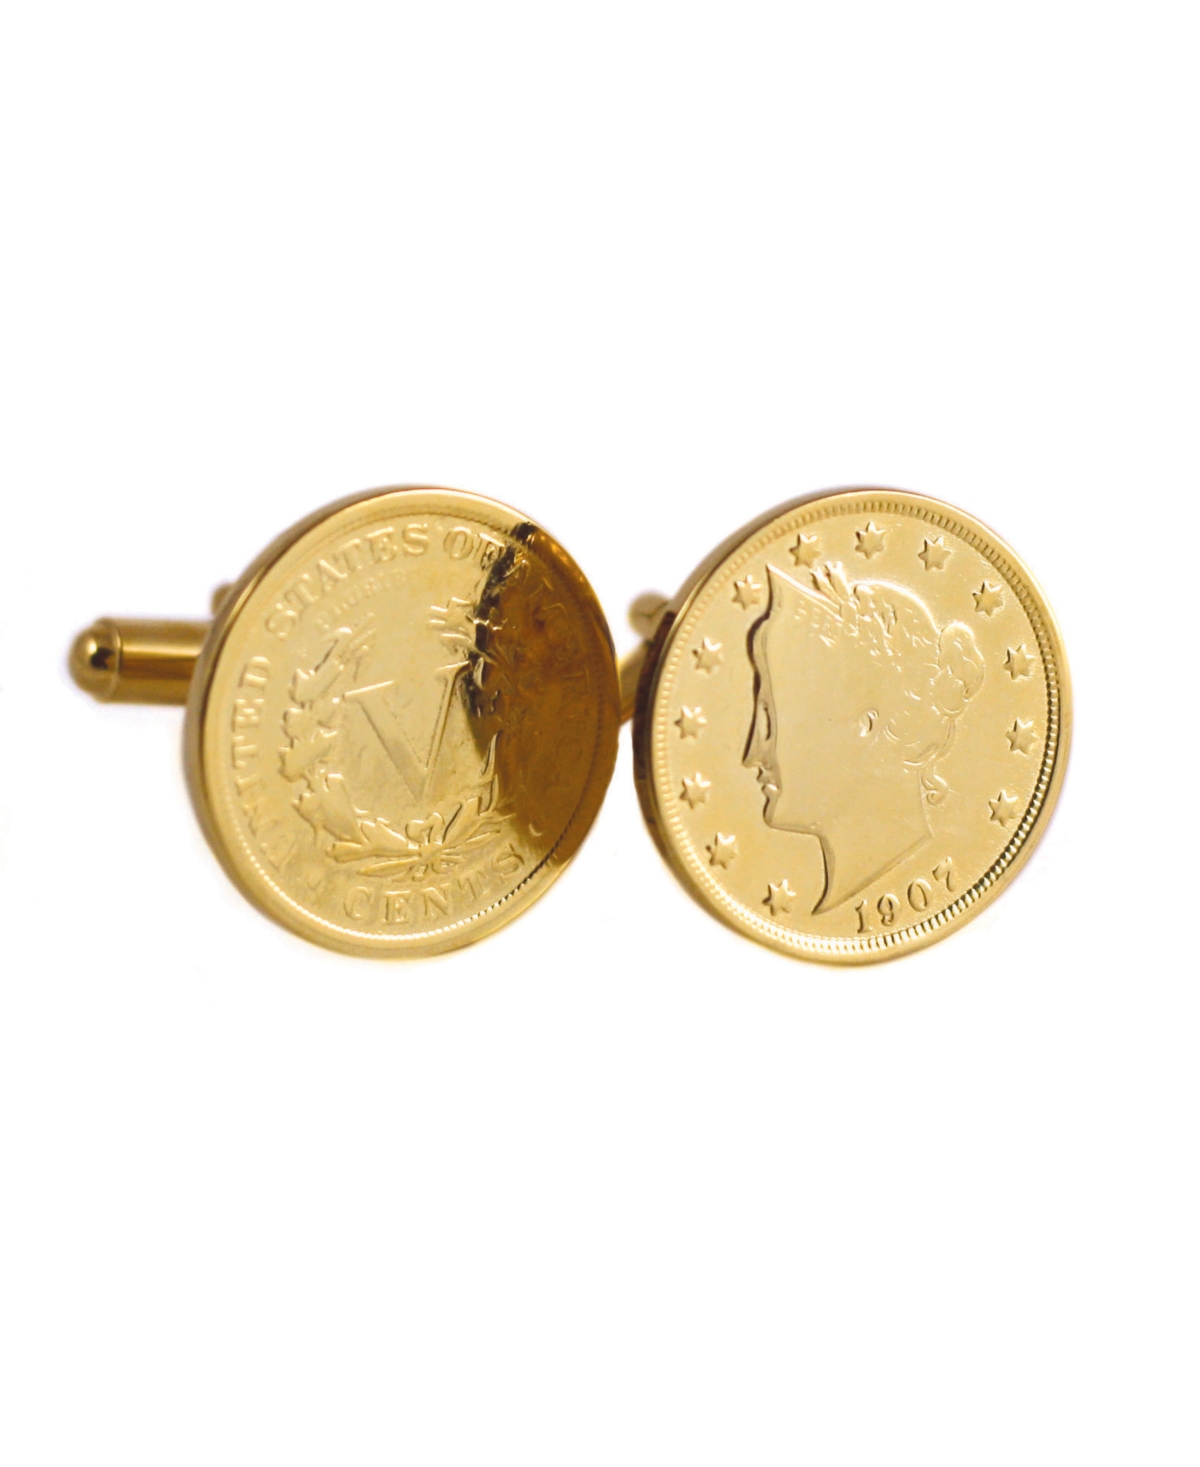 Gold-Layered Liberty Nickel Coin Cufflinks - Gold